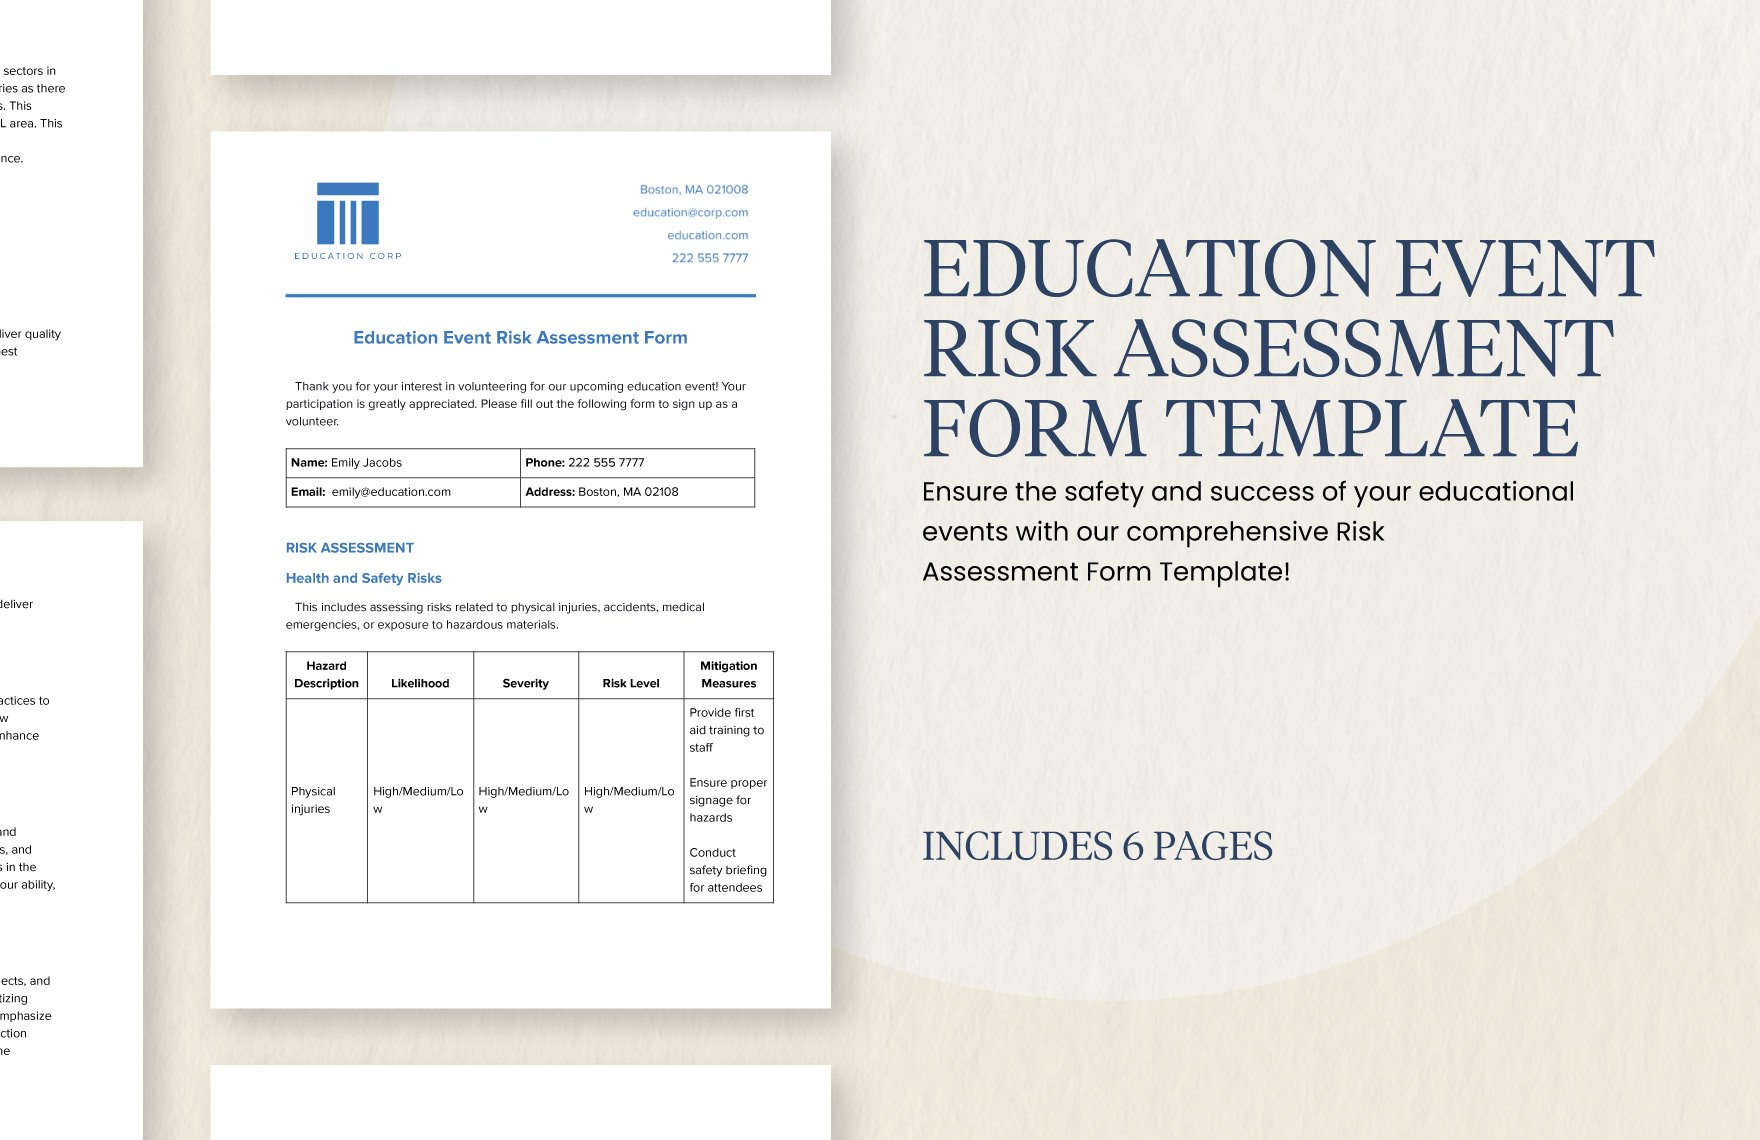 Education Event Risk Assessment Form Template